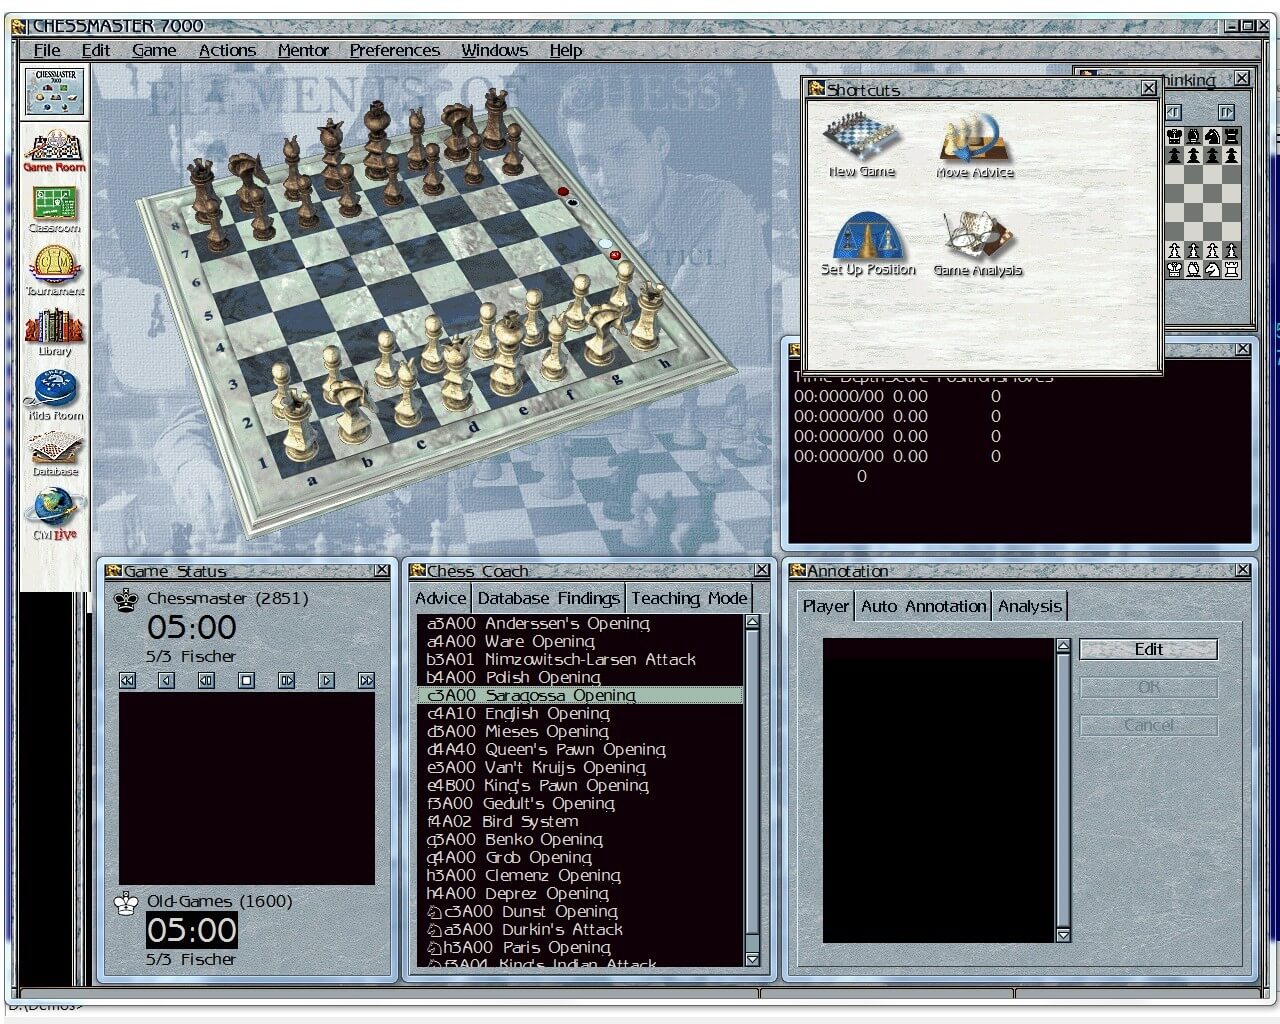 Chessmaster 6000 - Wikipedia